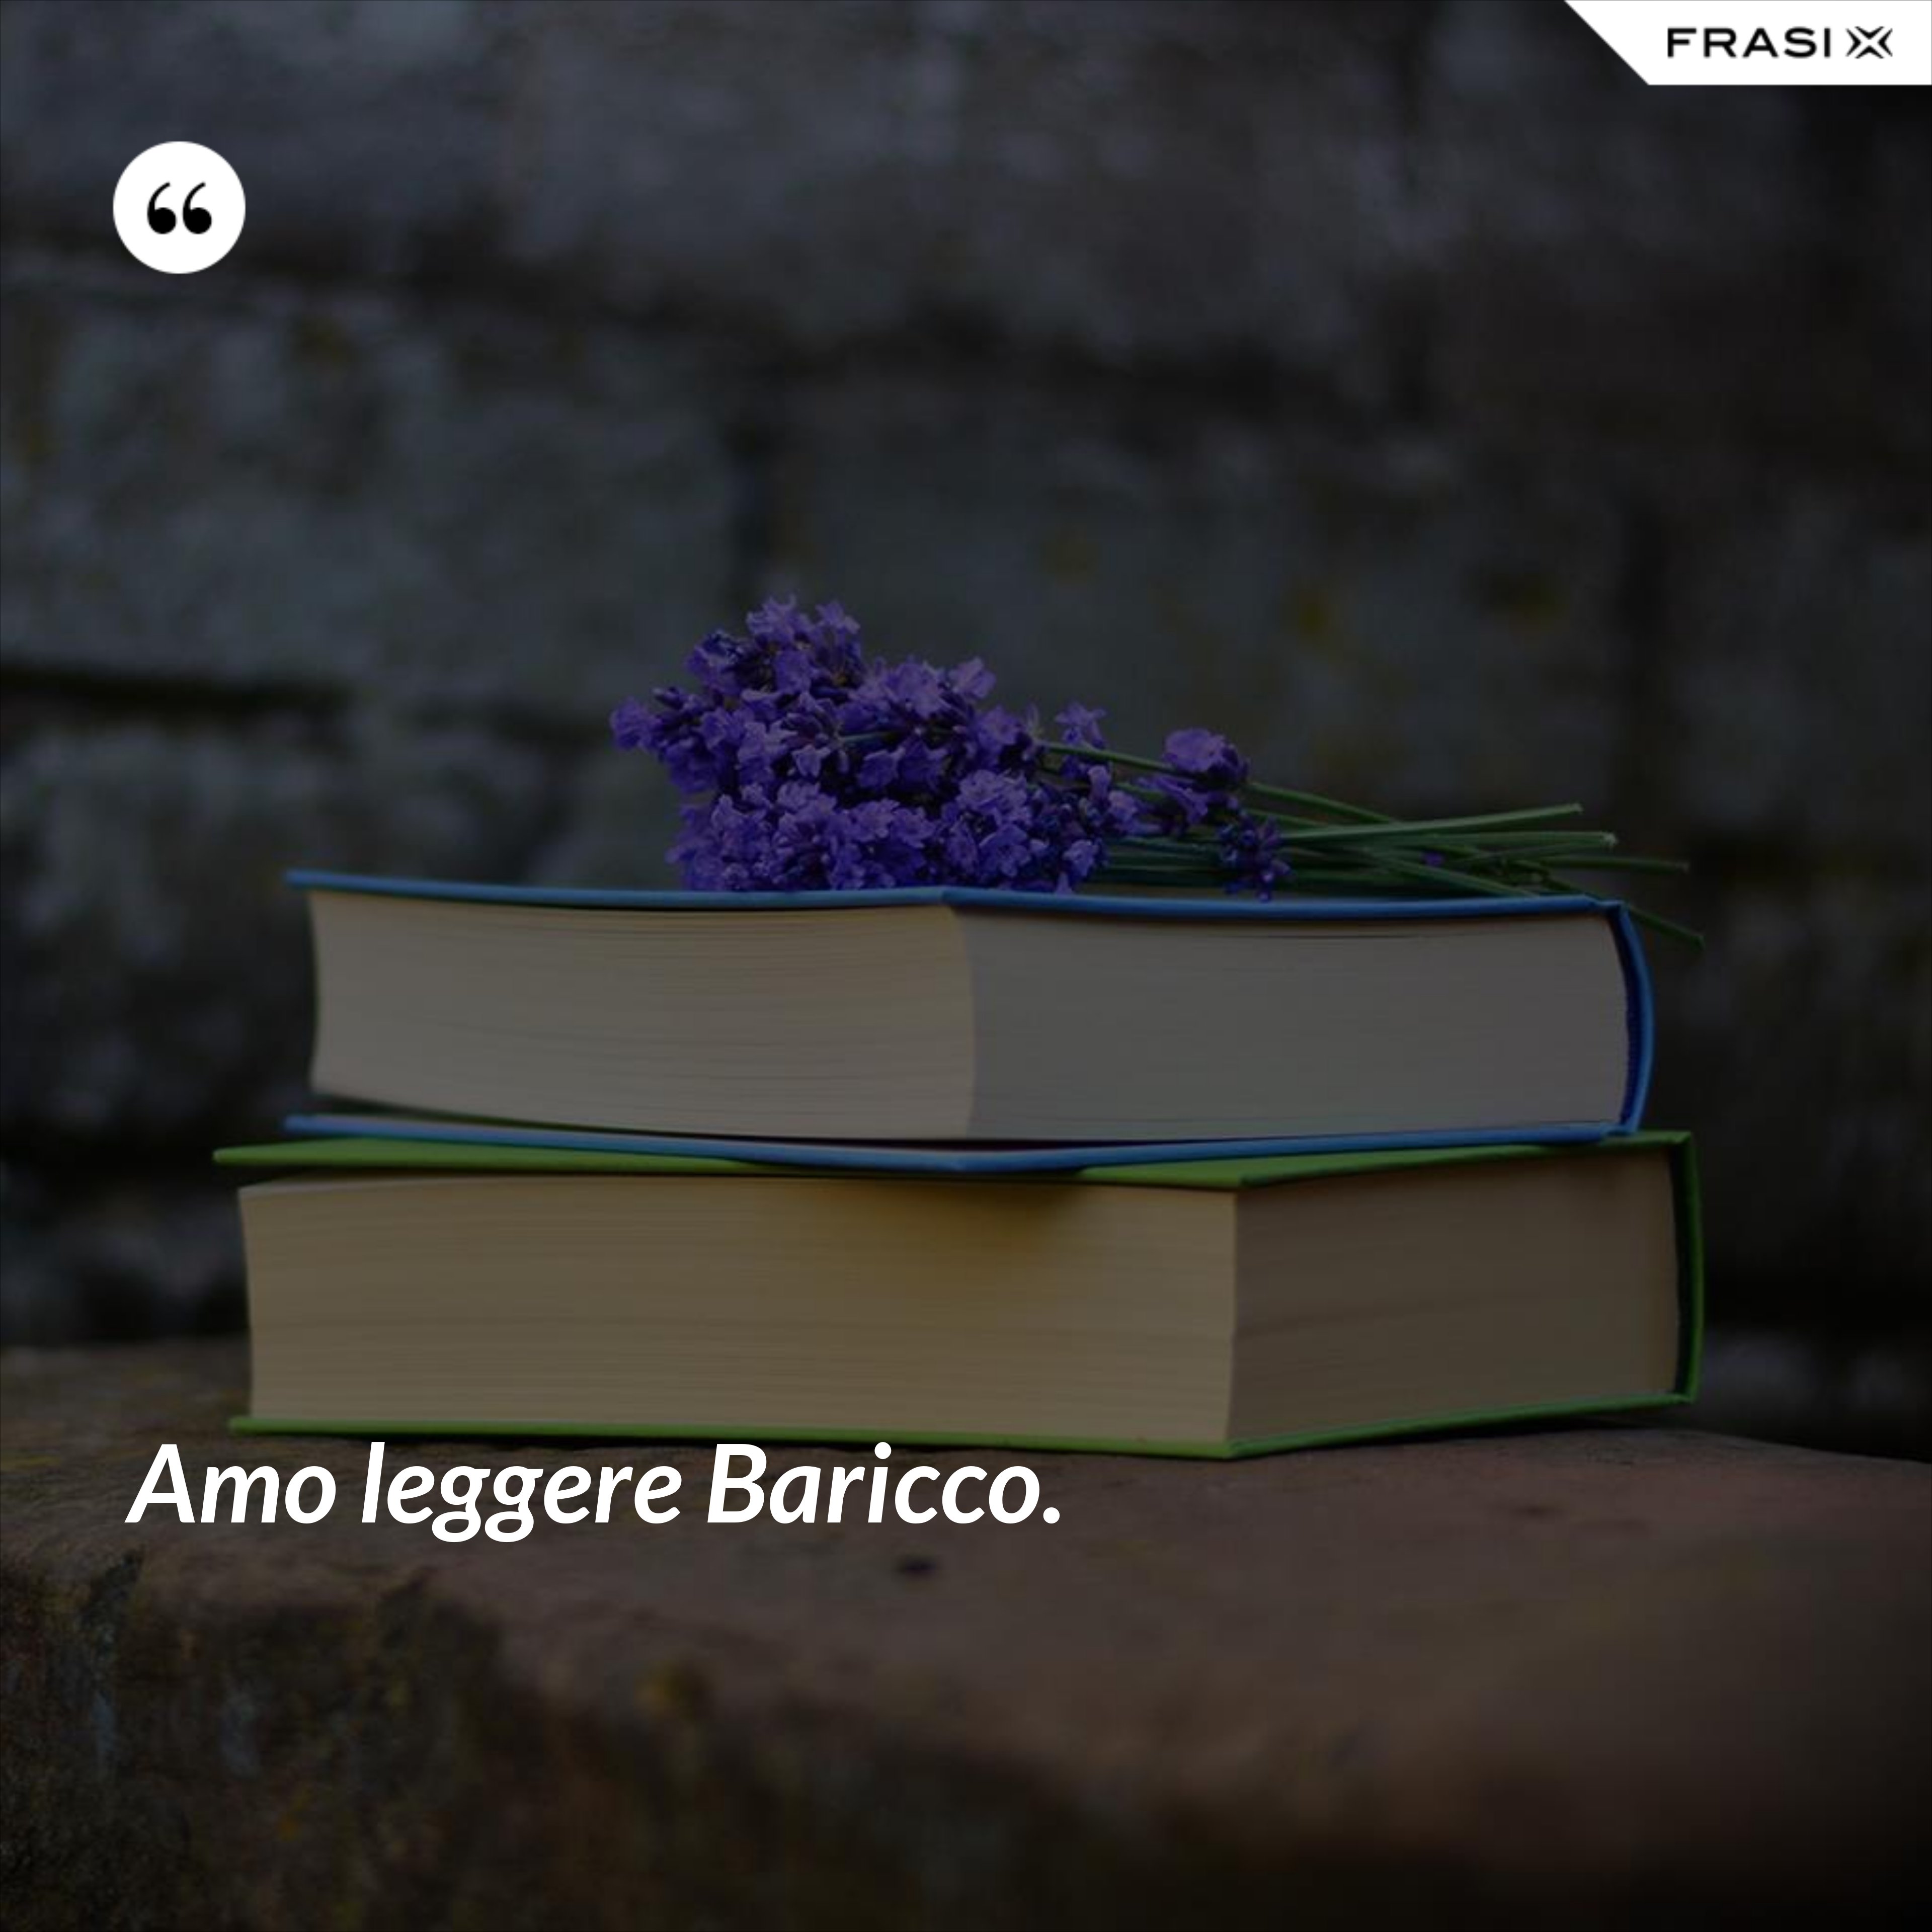 Amo leggere Baricco. - Anonimo